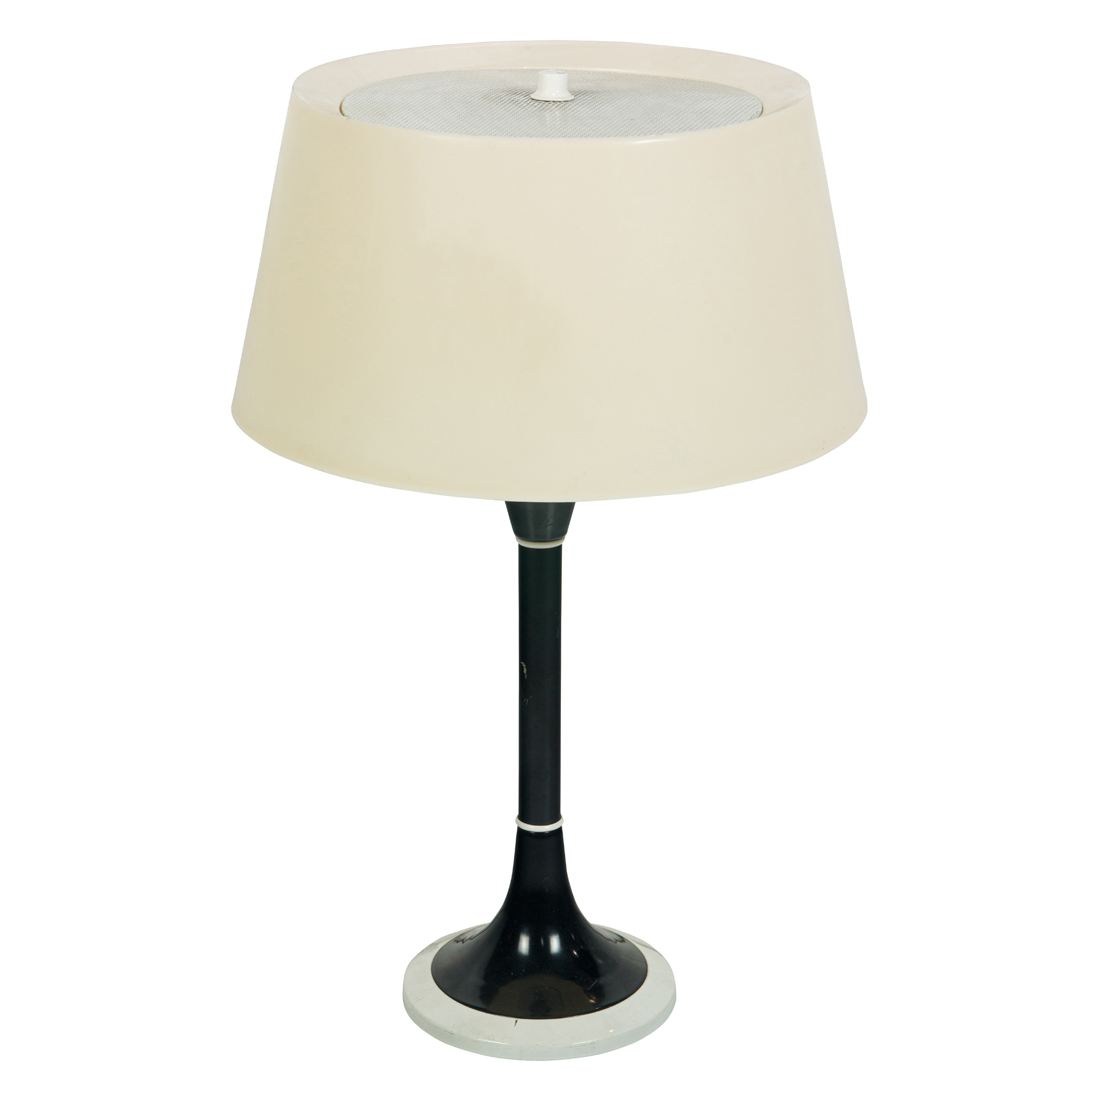 GERALD THURSTON TABLE LAMP Gerald 3a1417